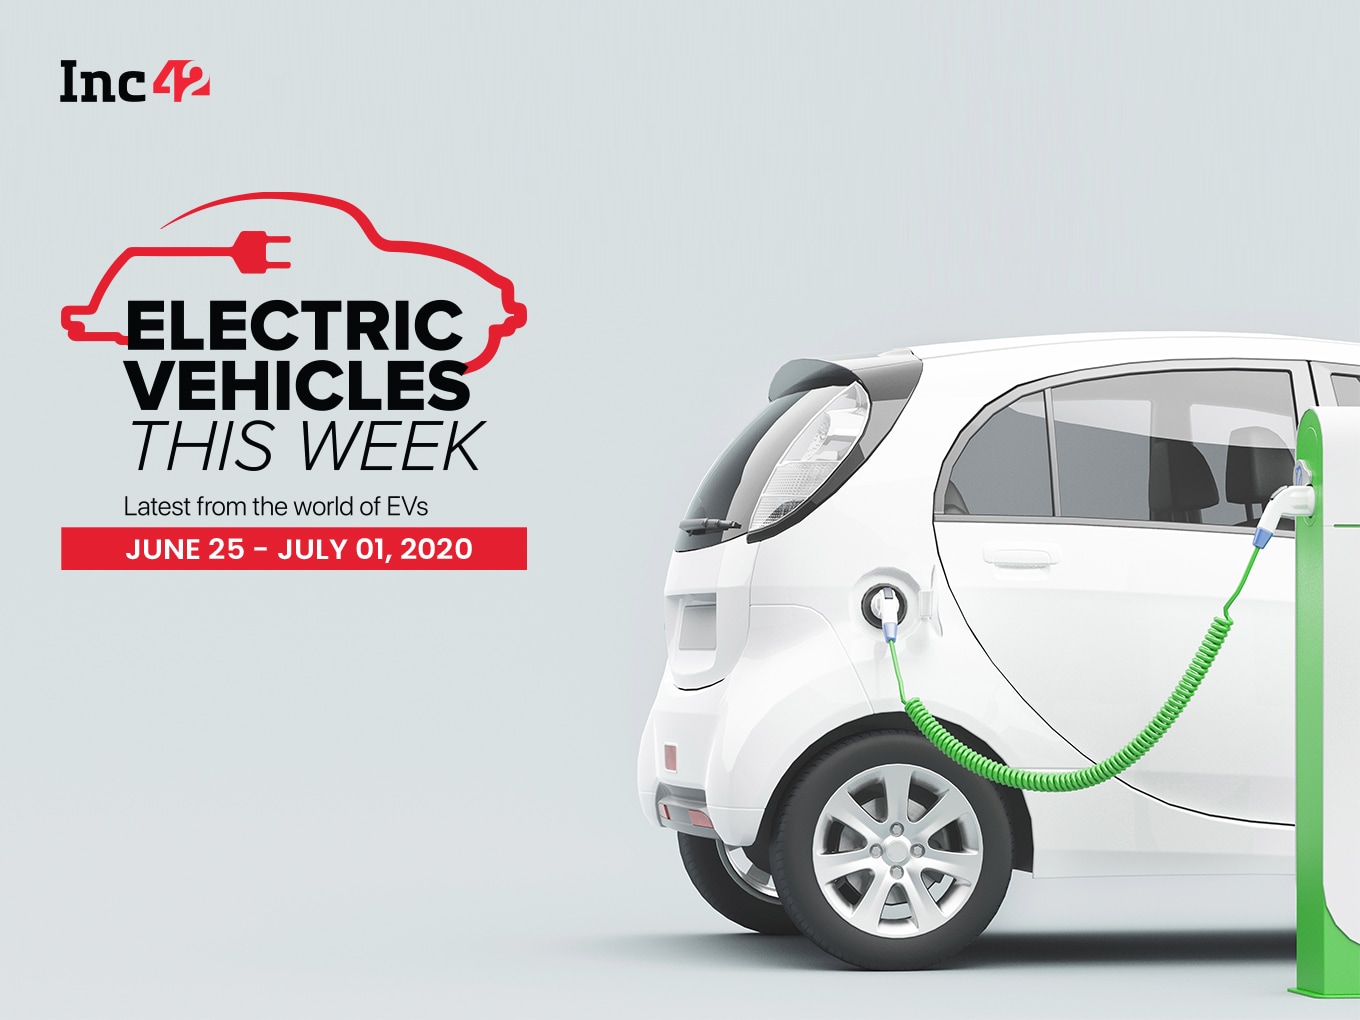 Electric Vehicles This Week: Mahindra Electric Eyes On Erickshaw Market & More